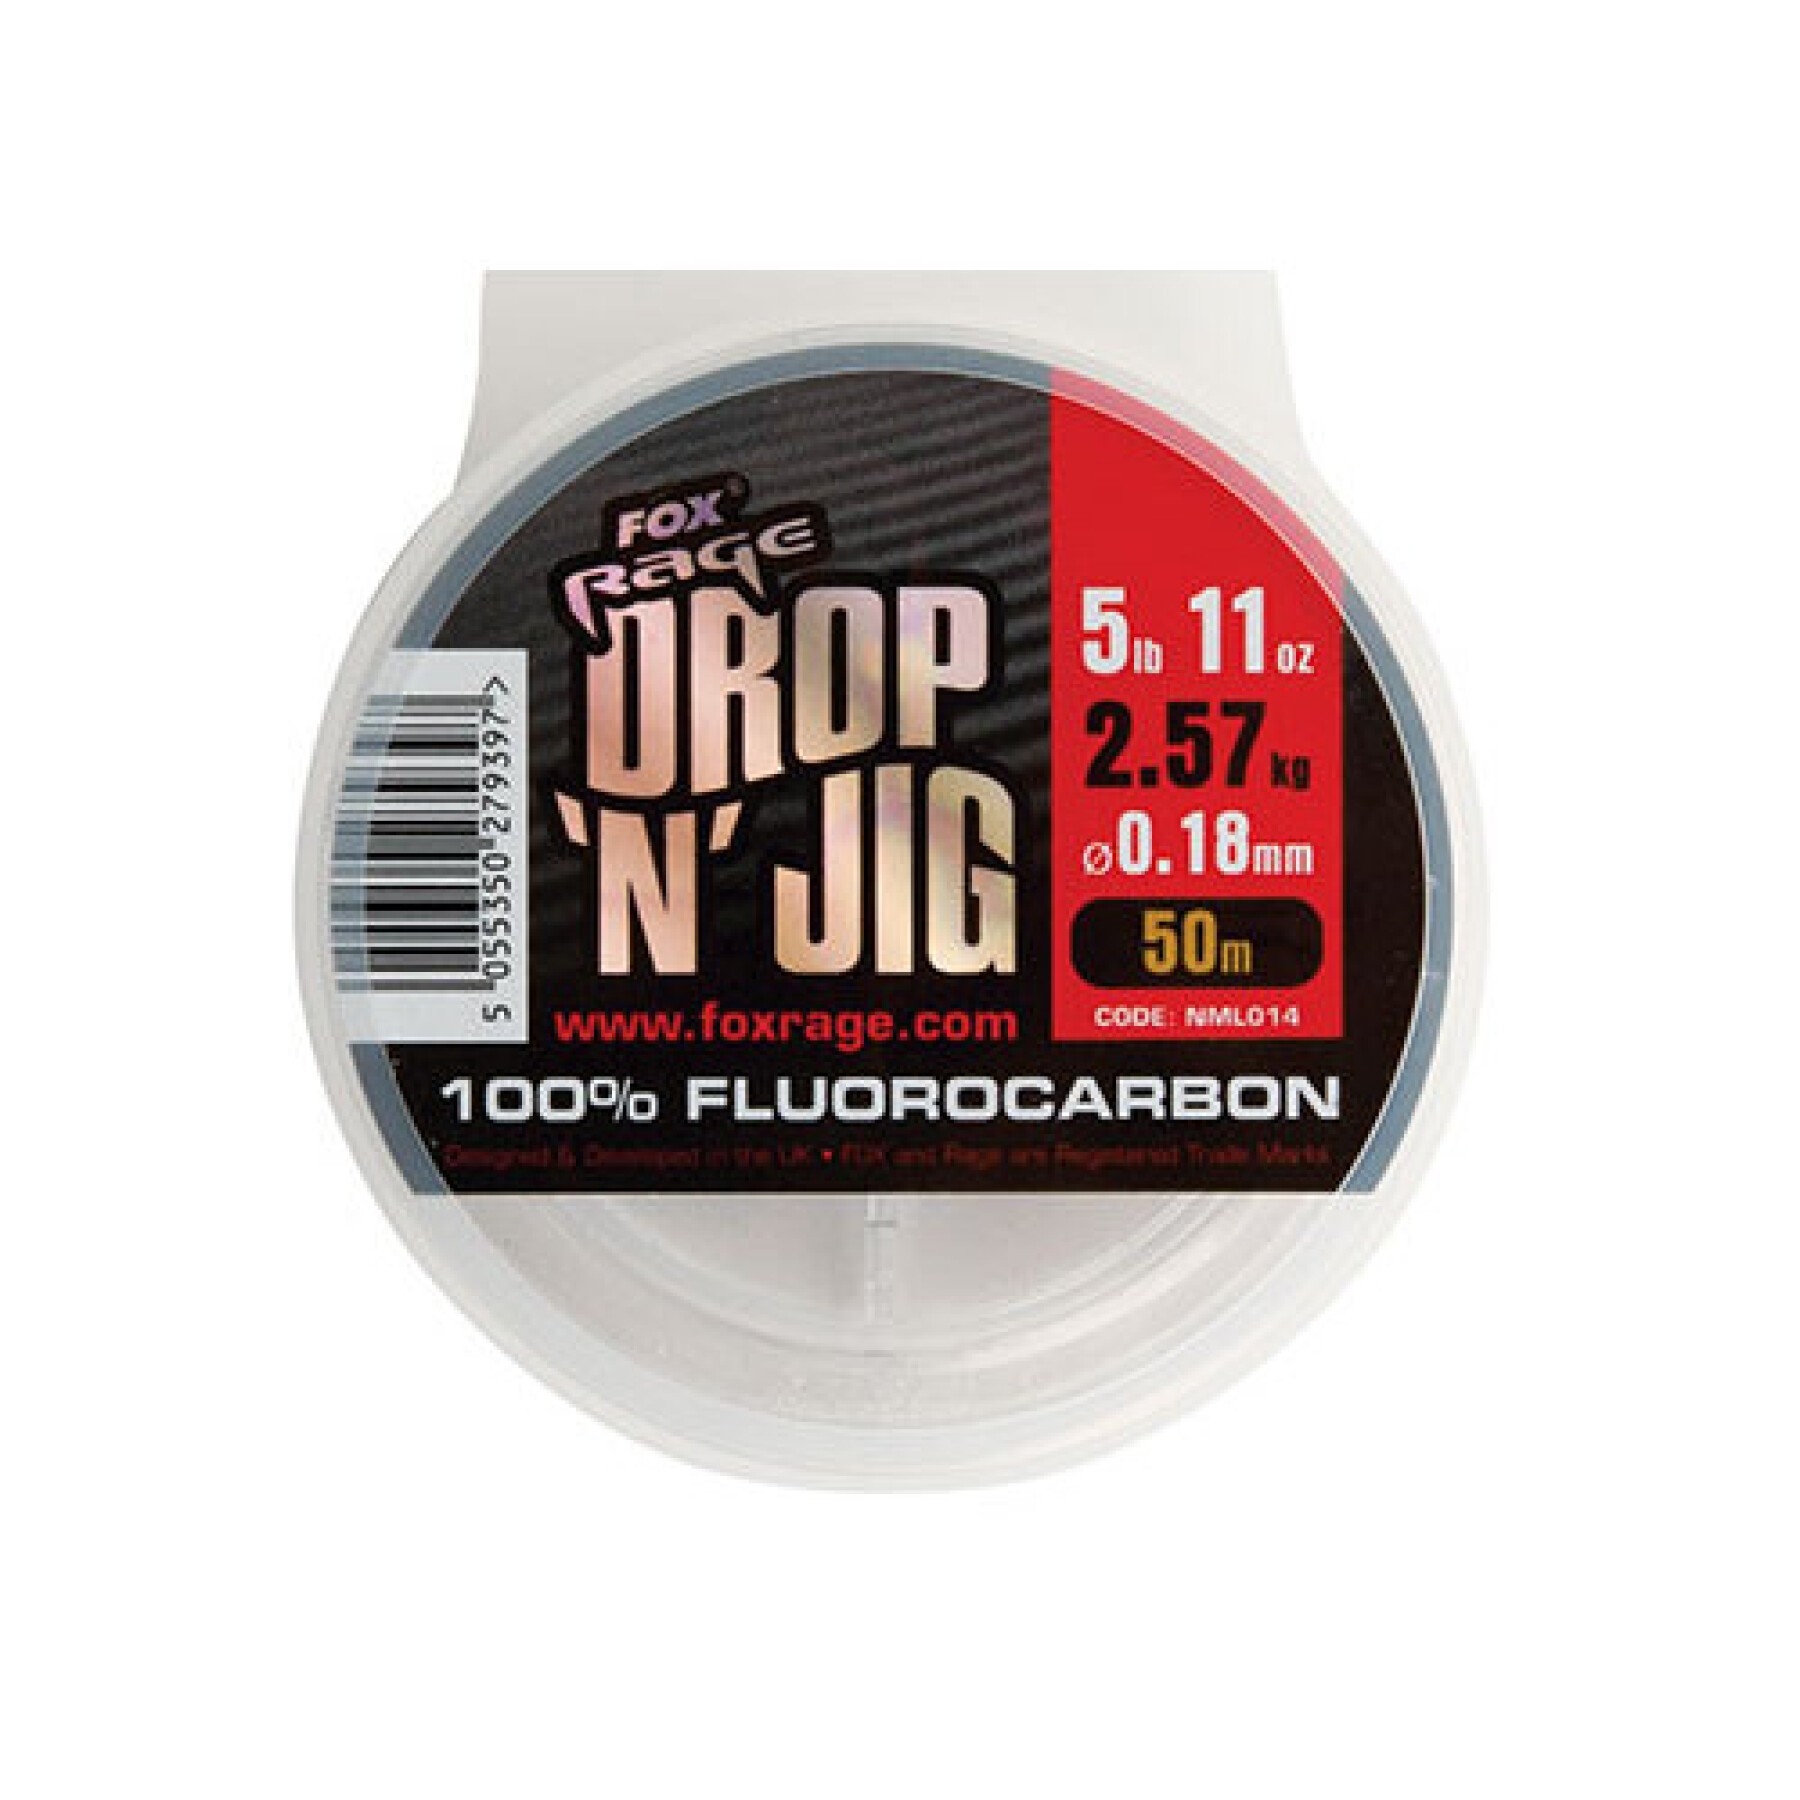 Fluorocarbon Fox Rage drop & jig 6.28kg / 13.84lb x 50m